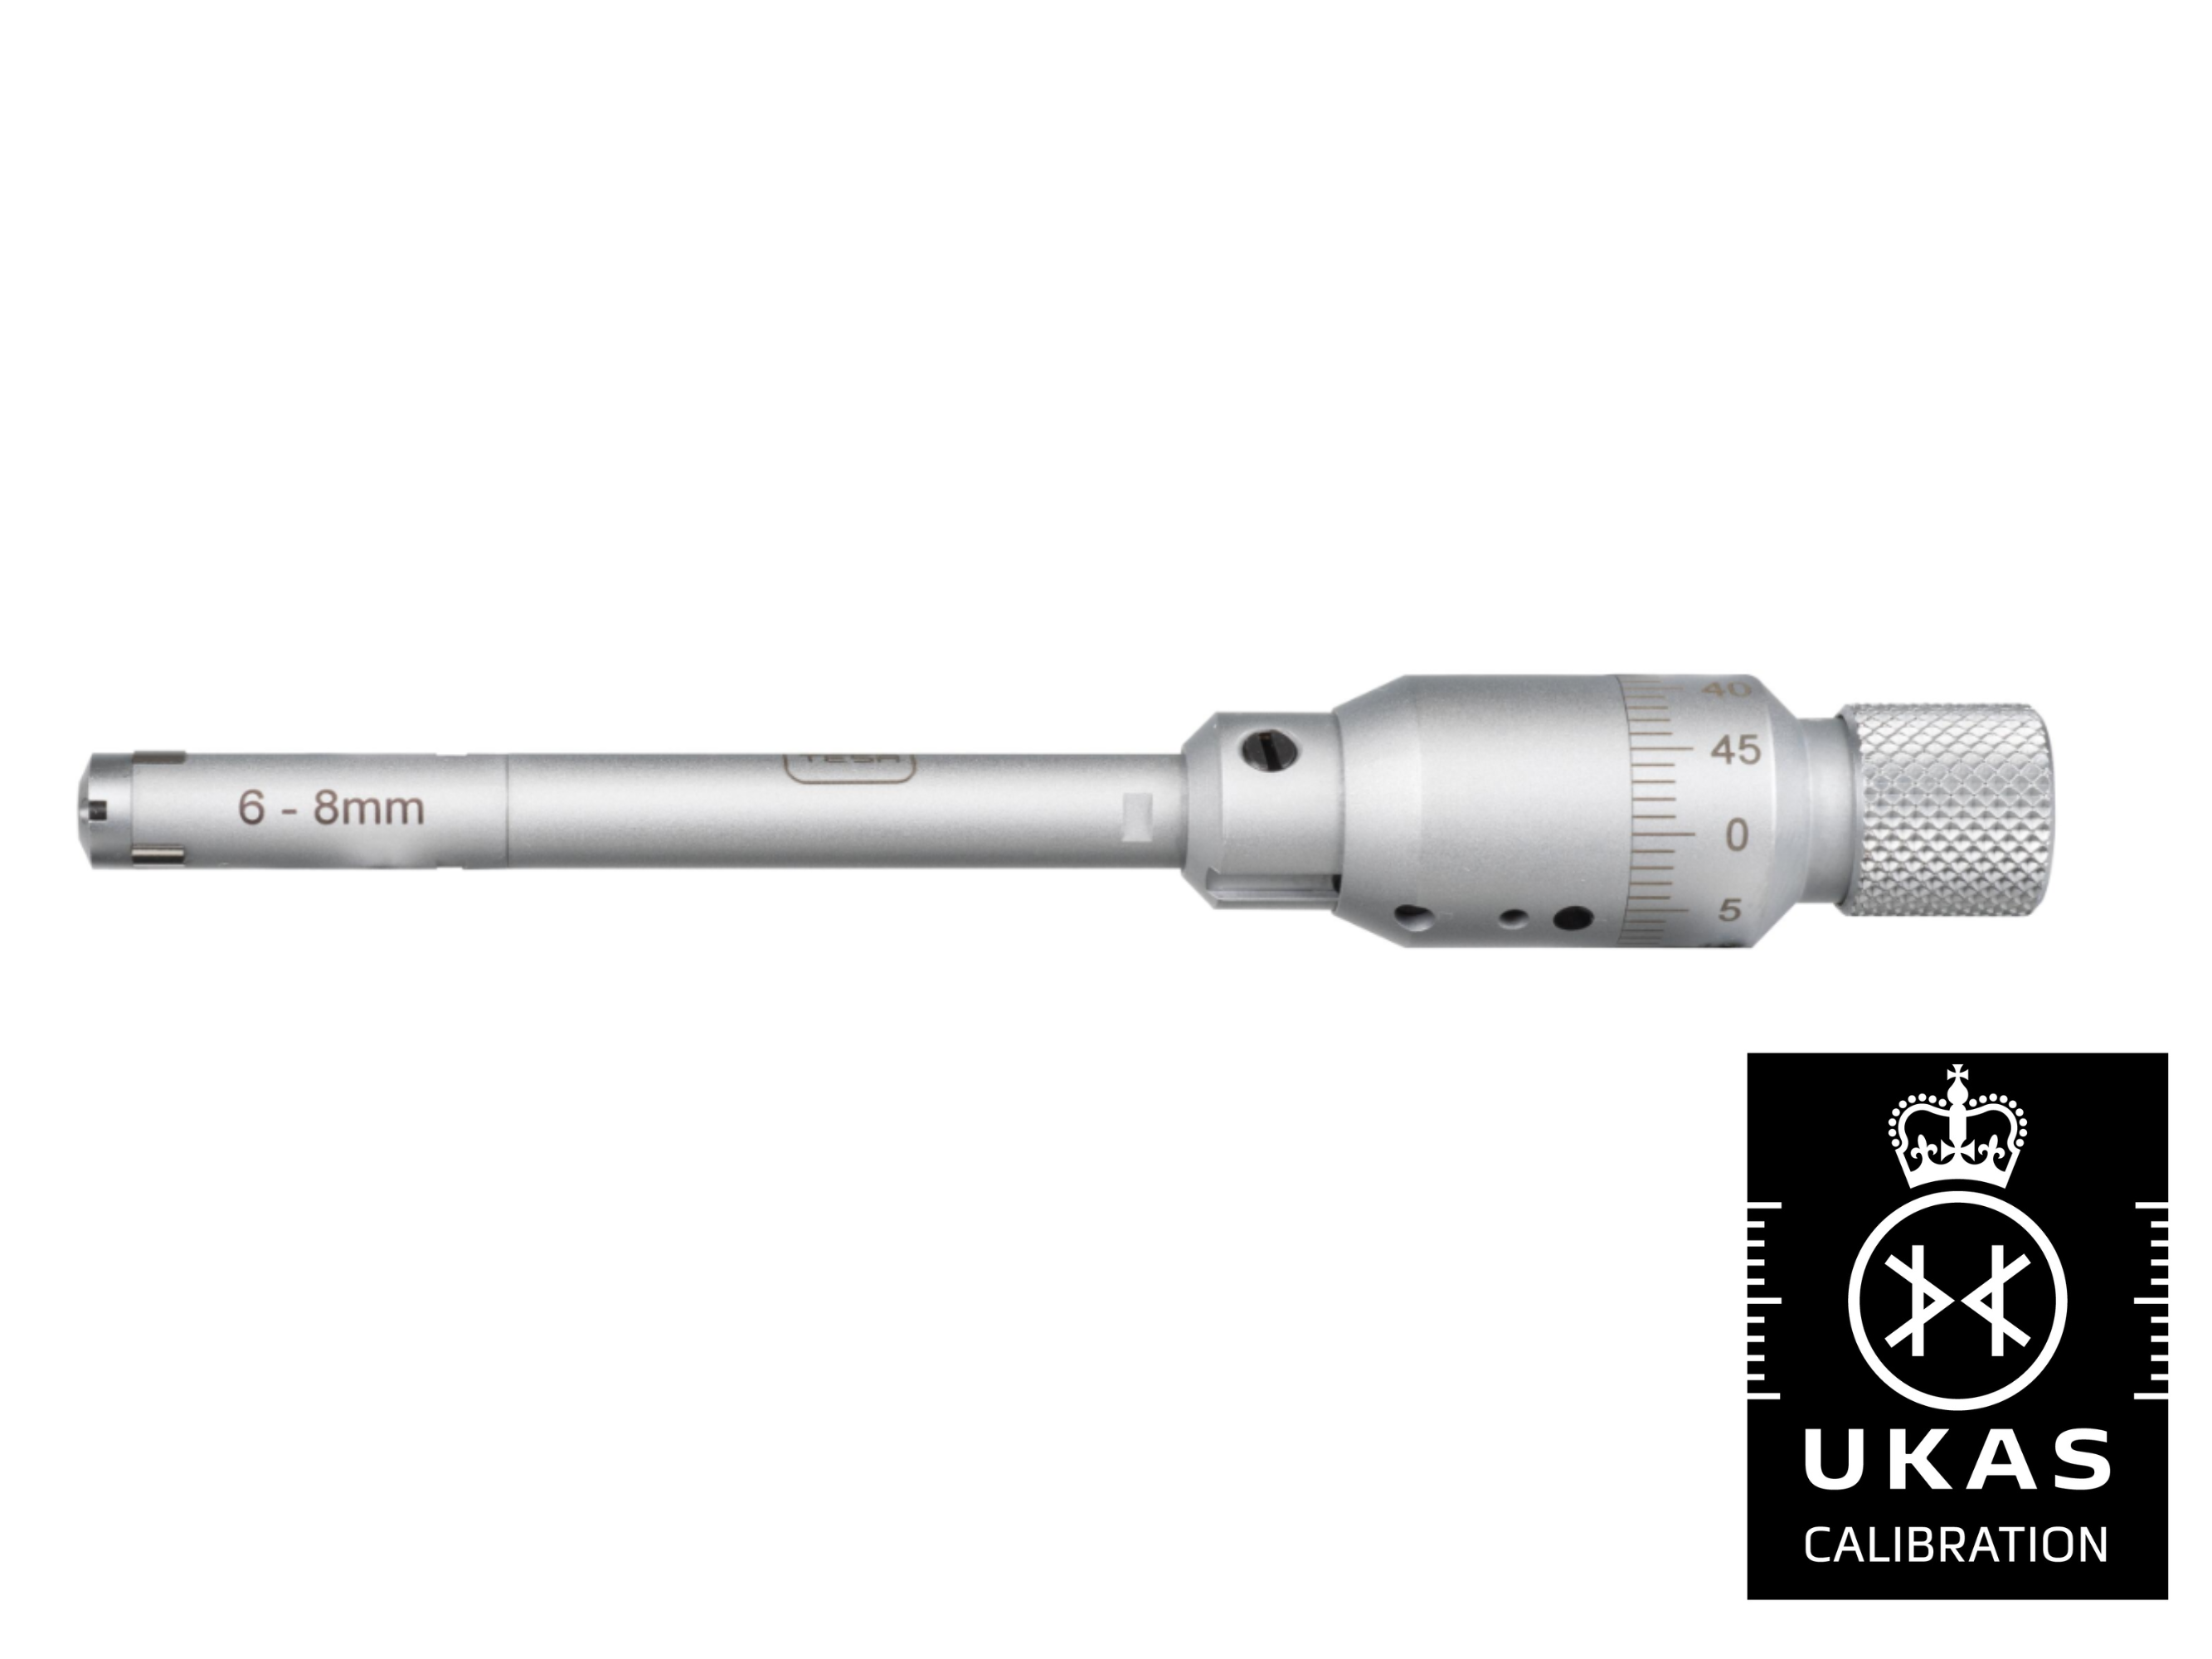 Tesa Imicro Analogue Bore Gauge 10-12 mm 00810003 with UKAS Calibration